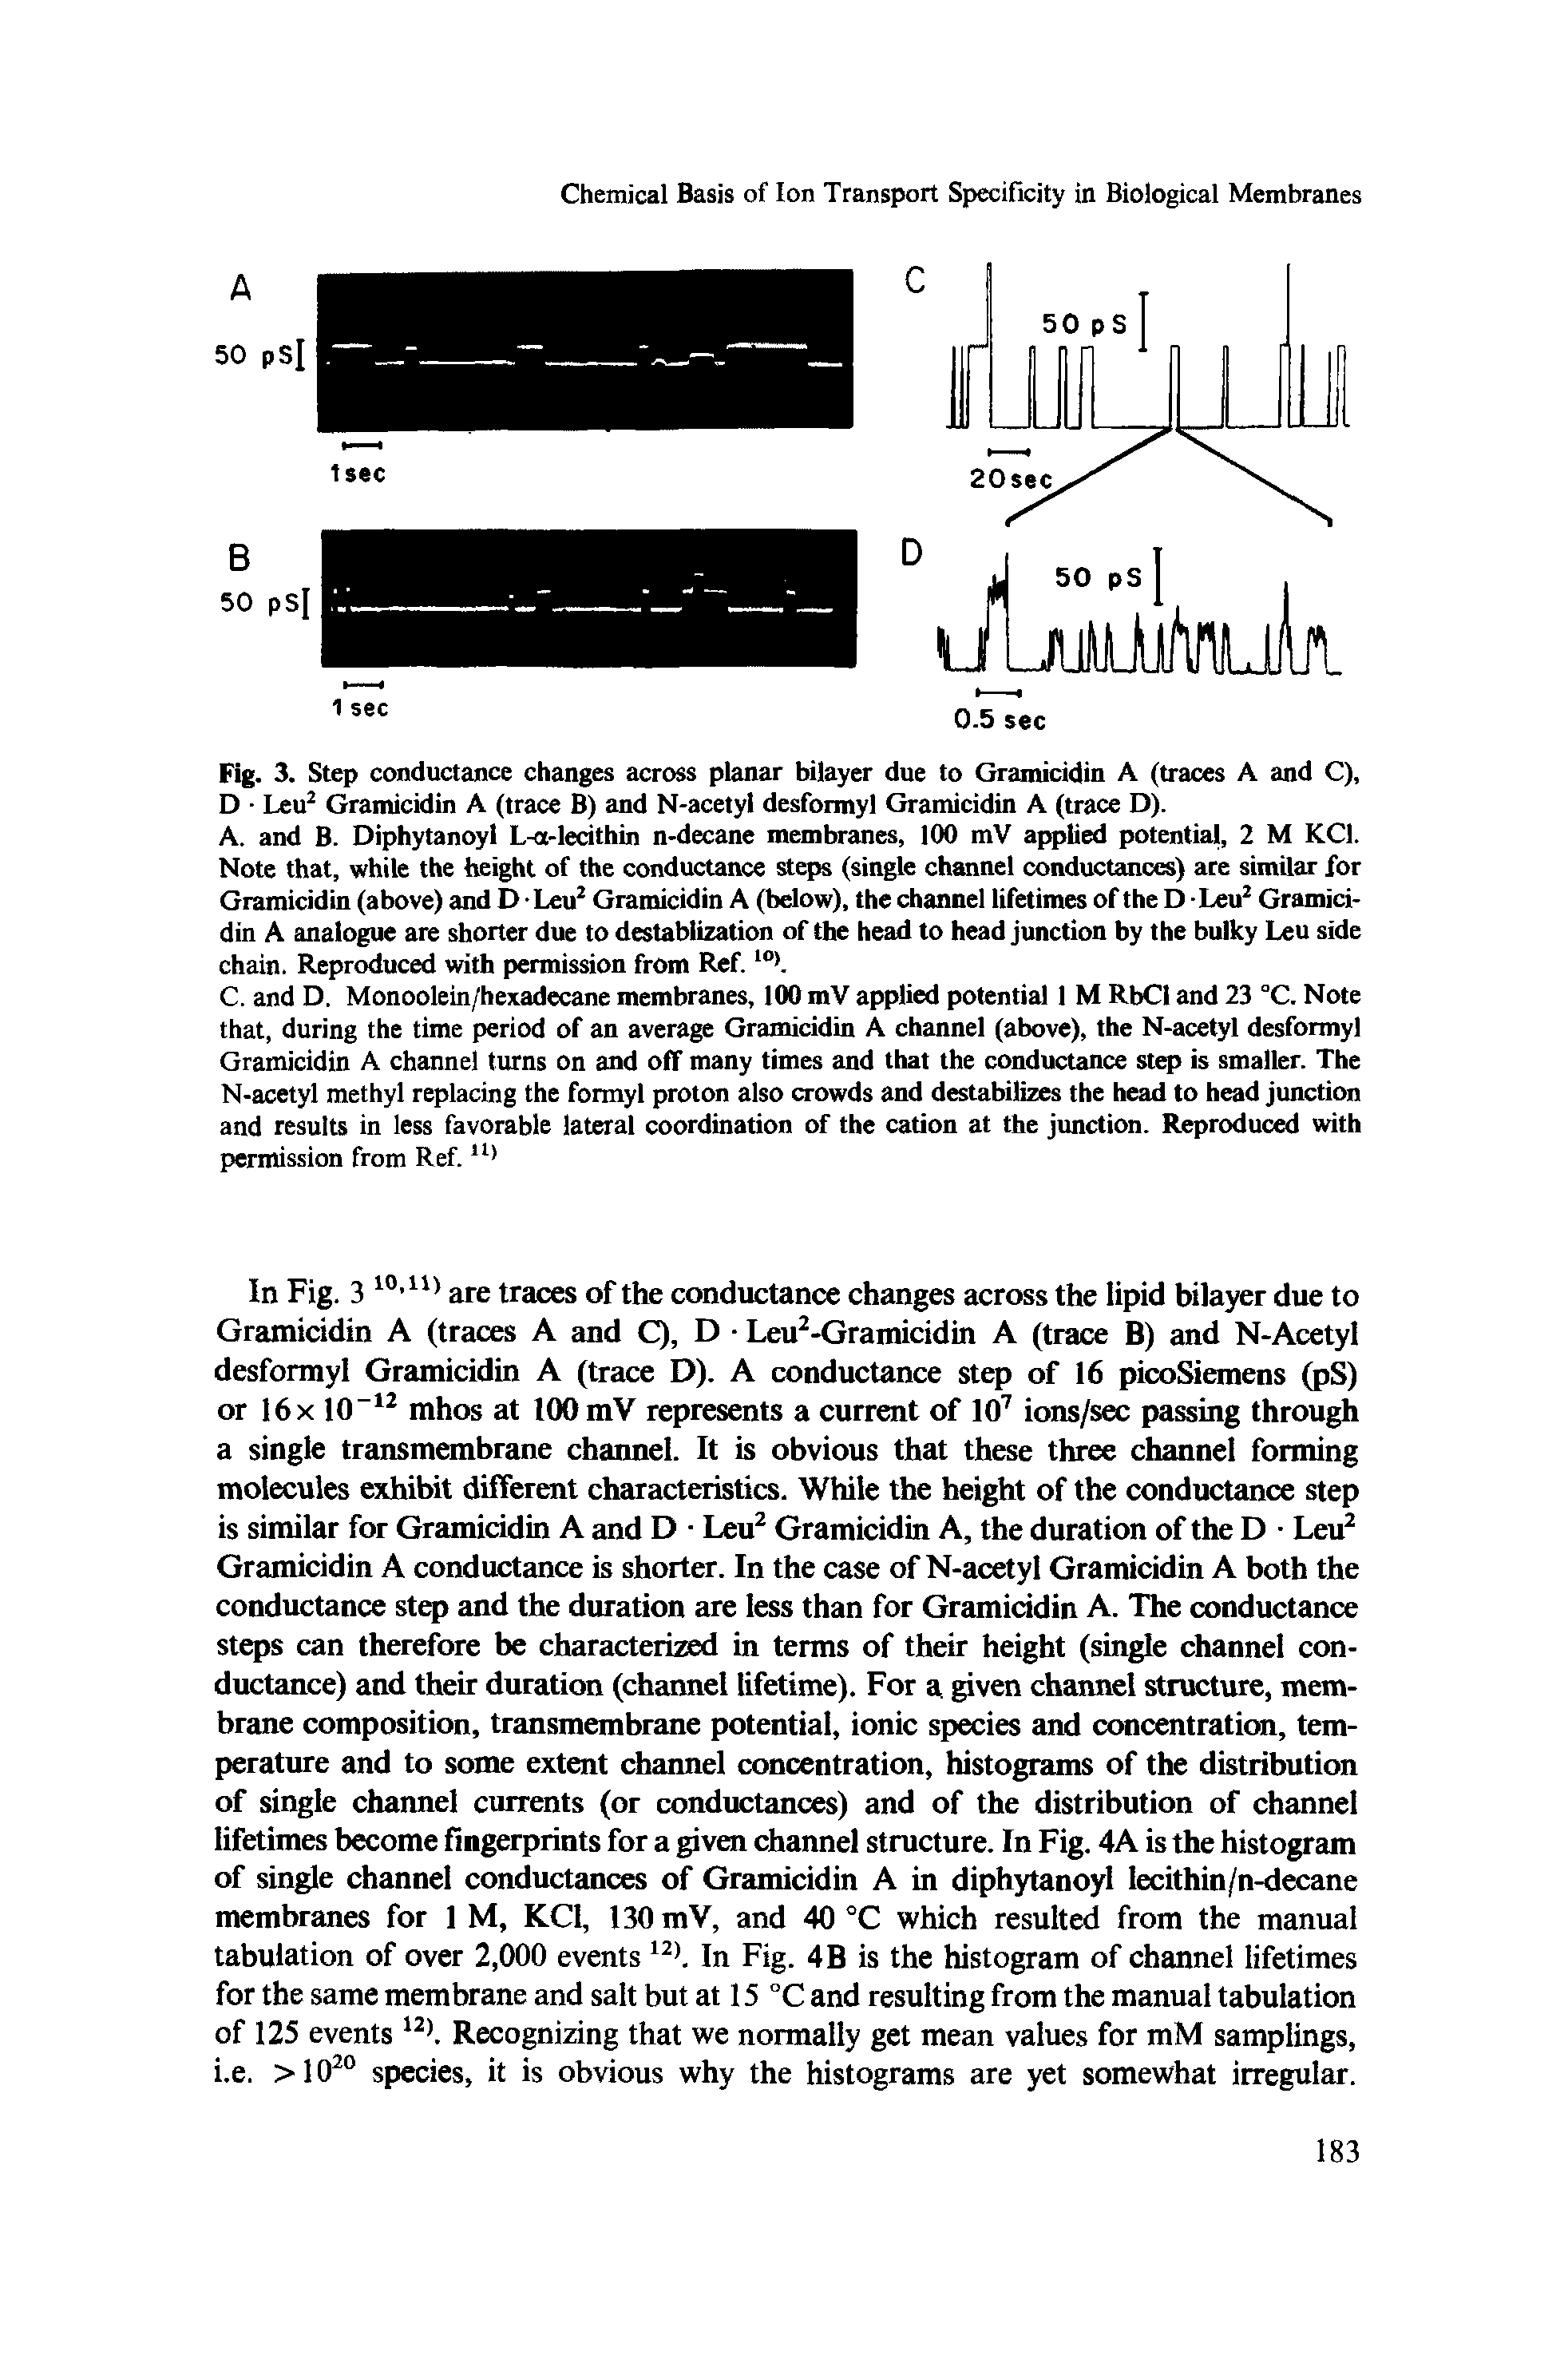 Fig. 3. Step conductance changes across planar bilayer due to Gramicidin A (traces A and C), D Leu2 Gramicidin A (trace B) and N-acetyl desformyl Gramicidin A (trace D).